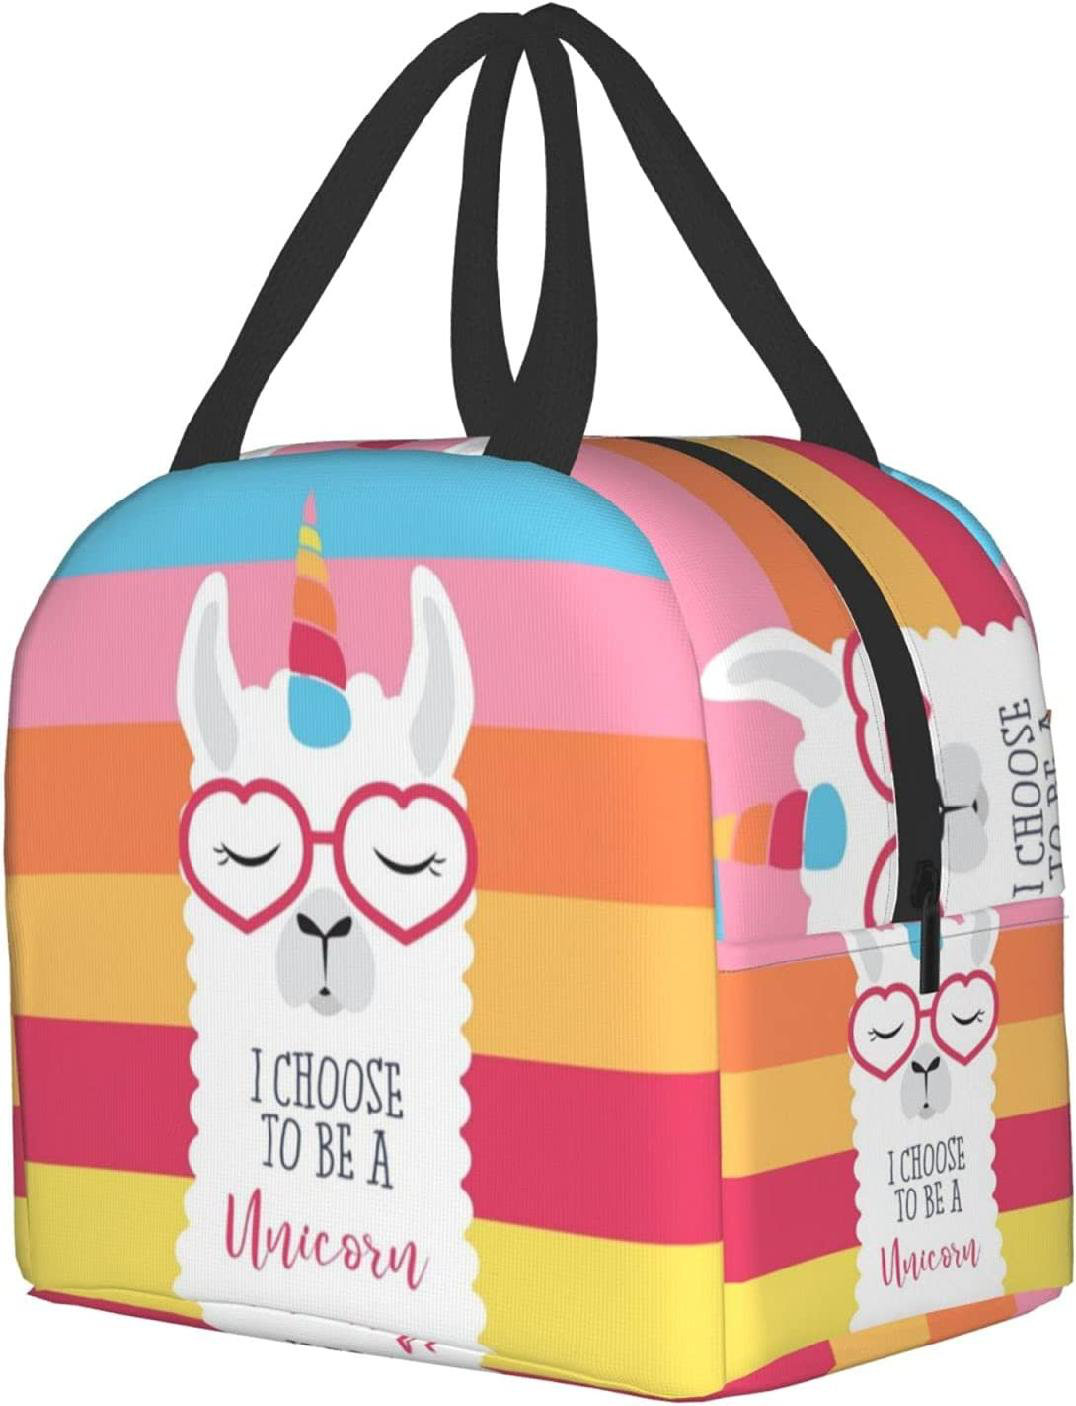 Bless international Lunch Box - Insulated Lunch Bags For Women/Men